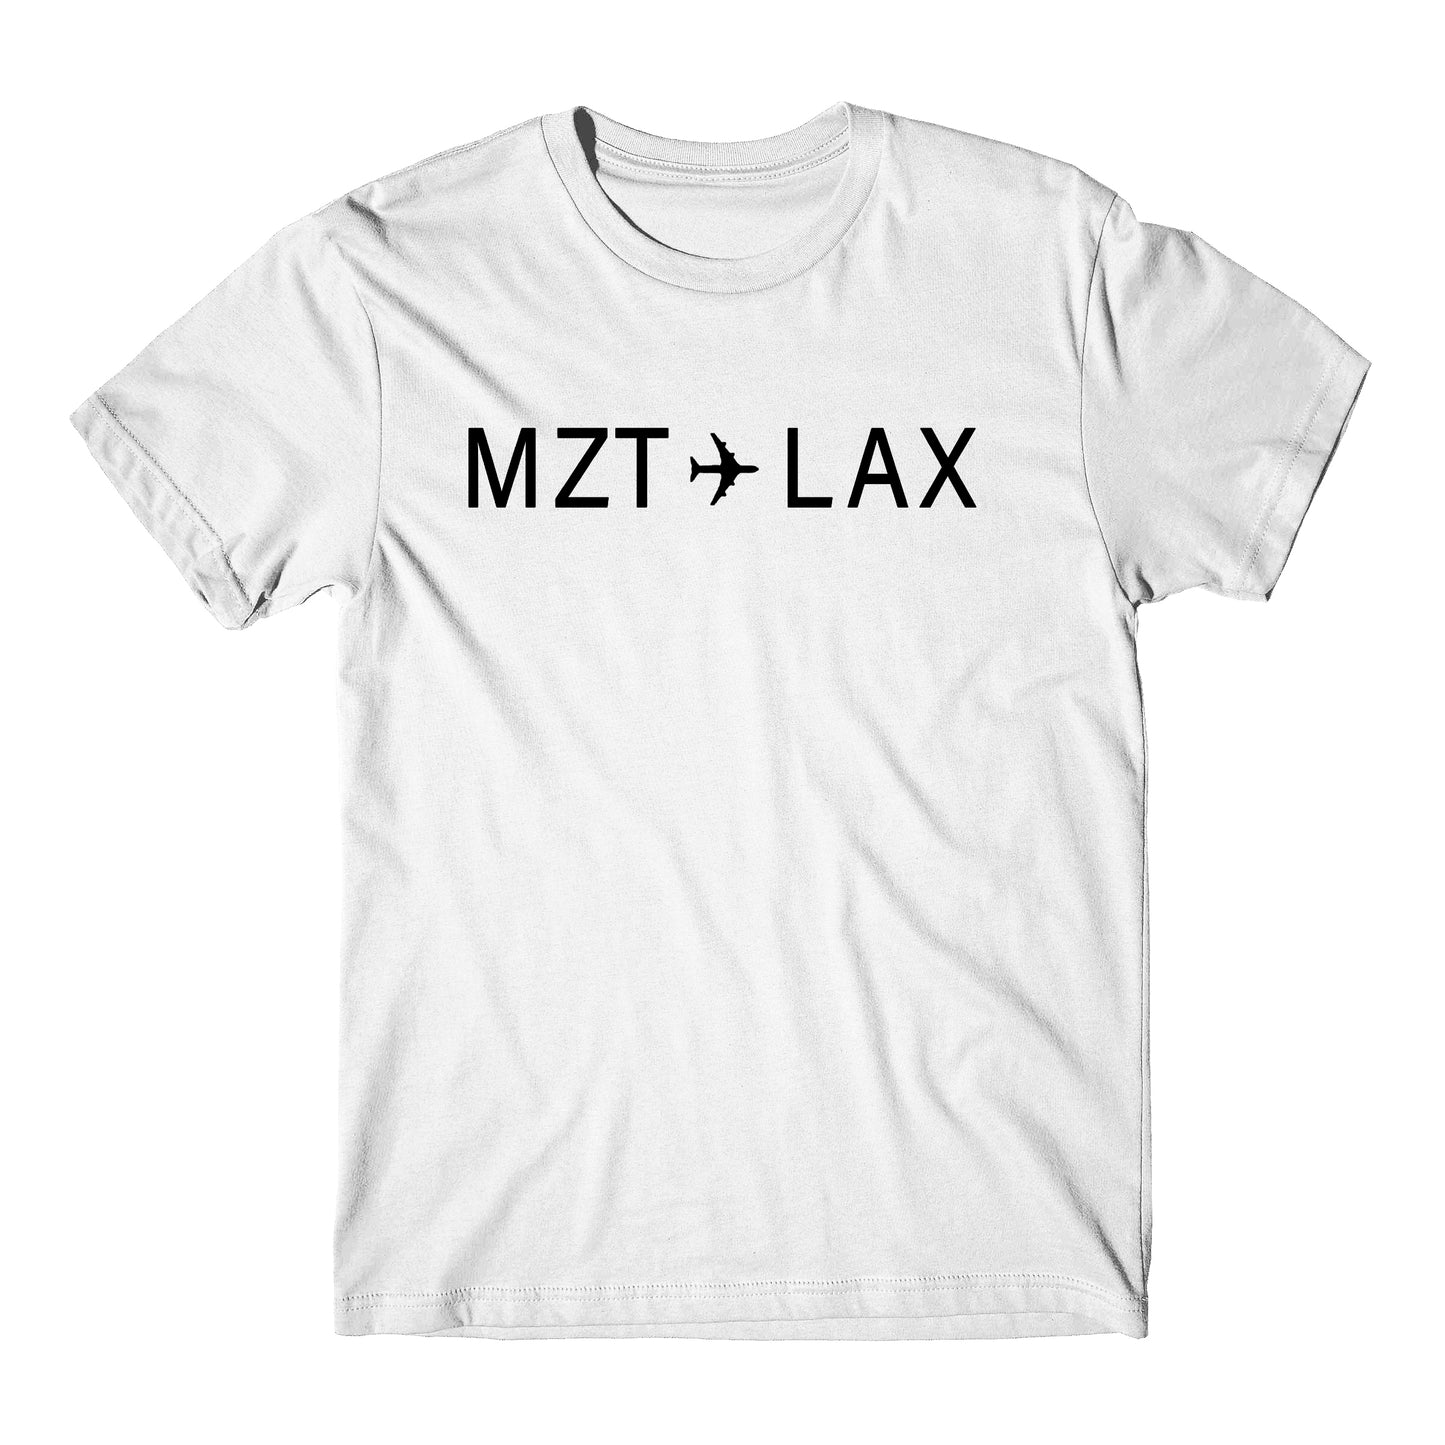 "MZT to LAX" Tee